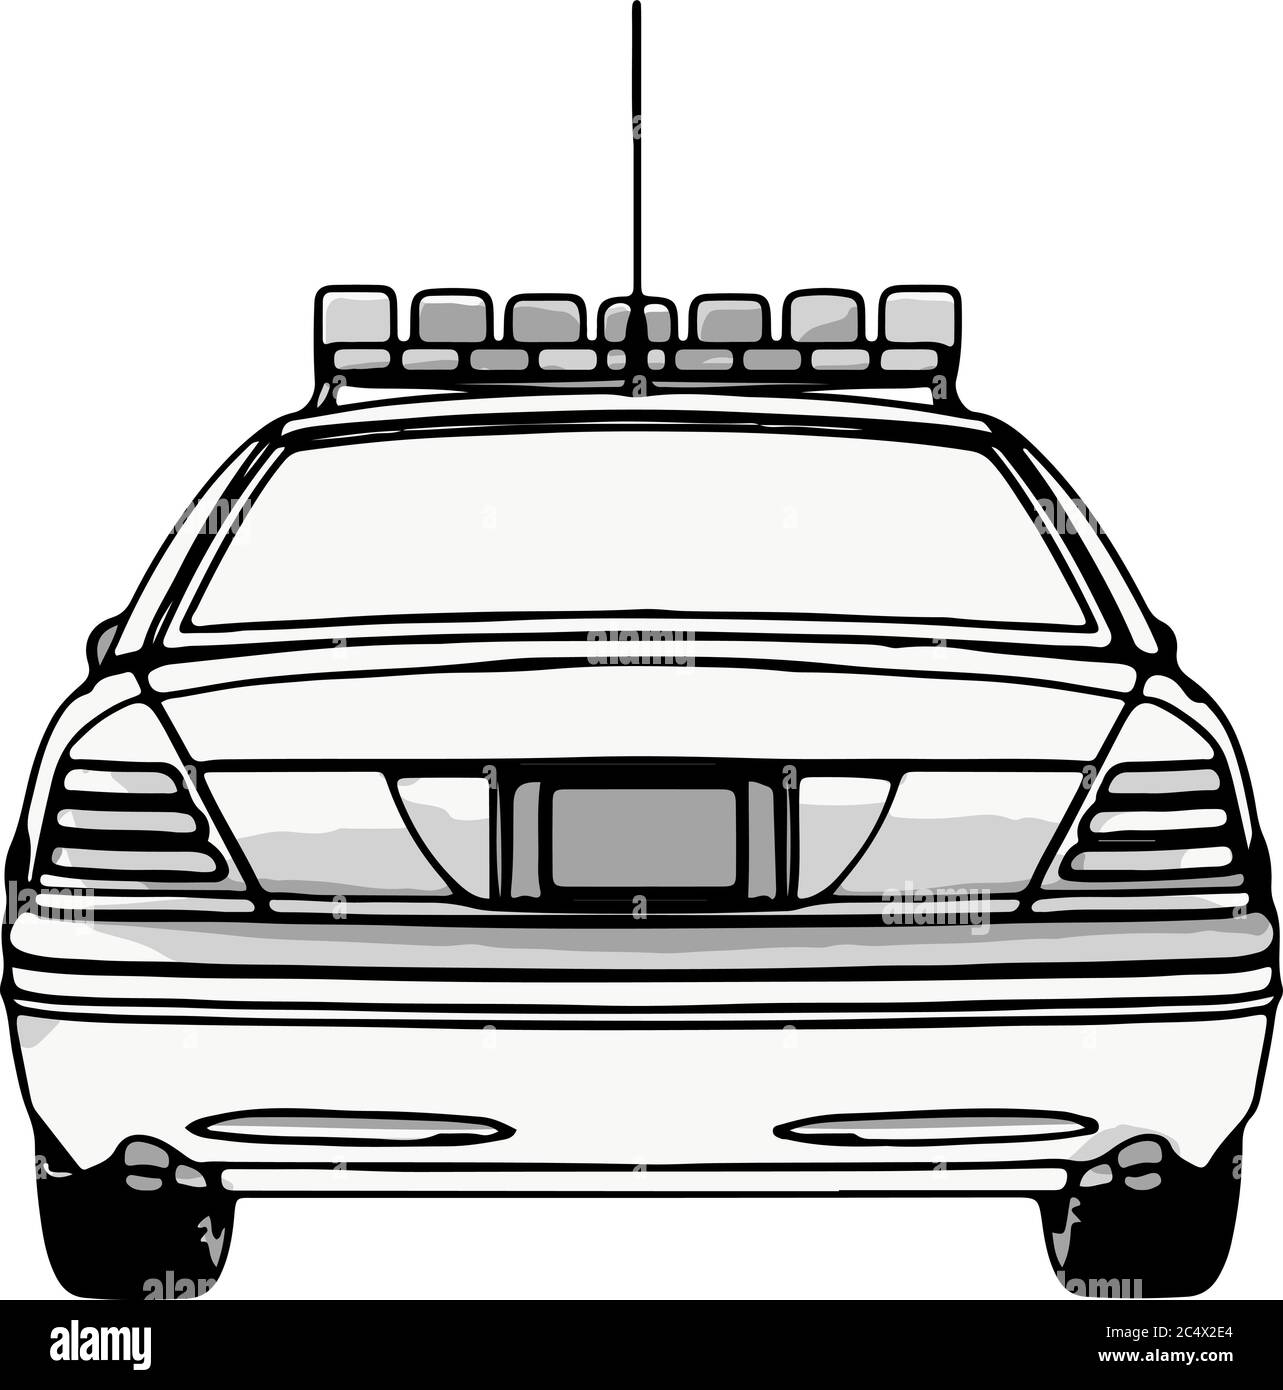 police car sketch vector Stock Vector Image & Art - Alamy